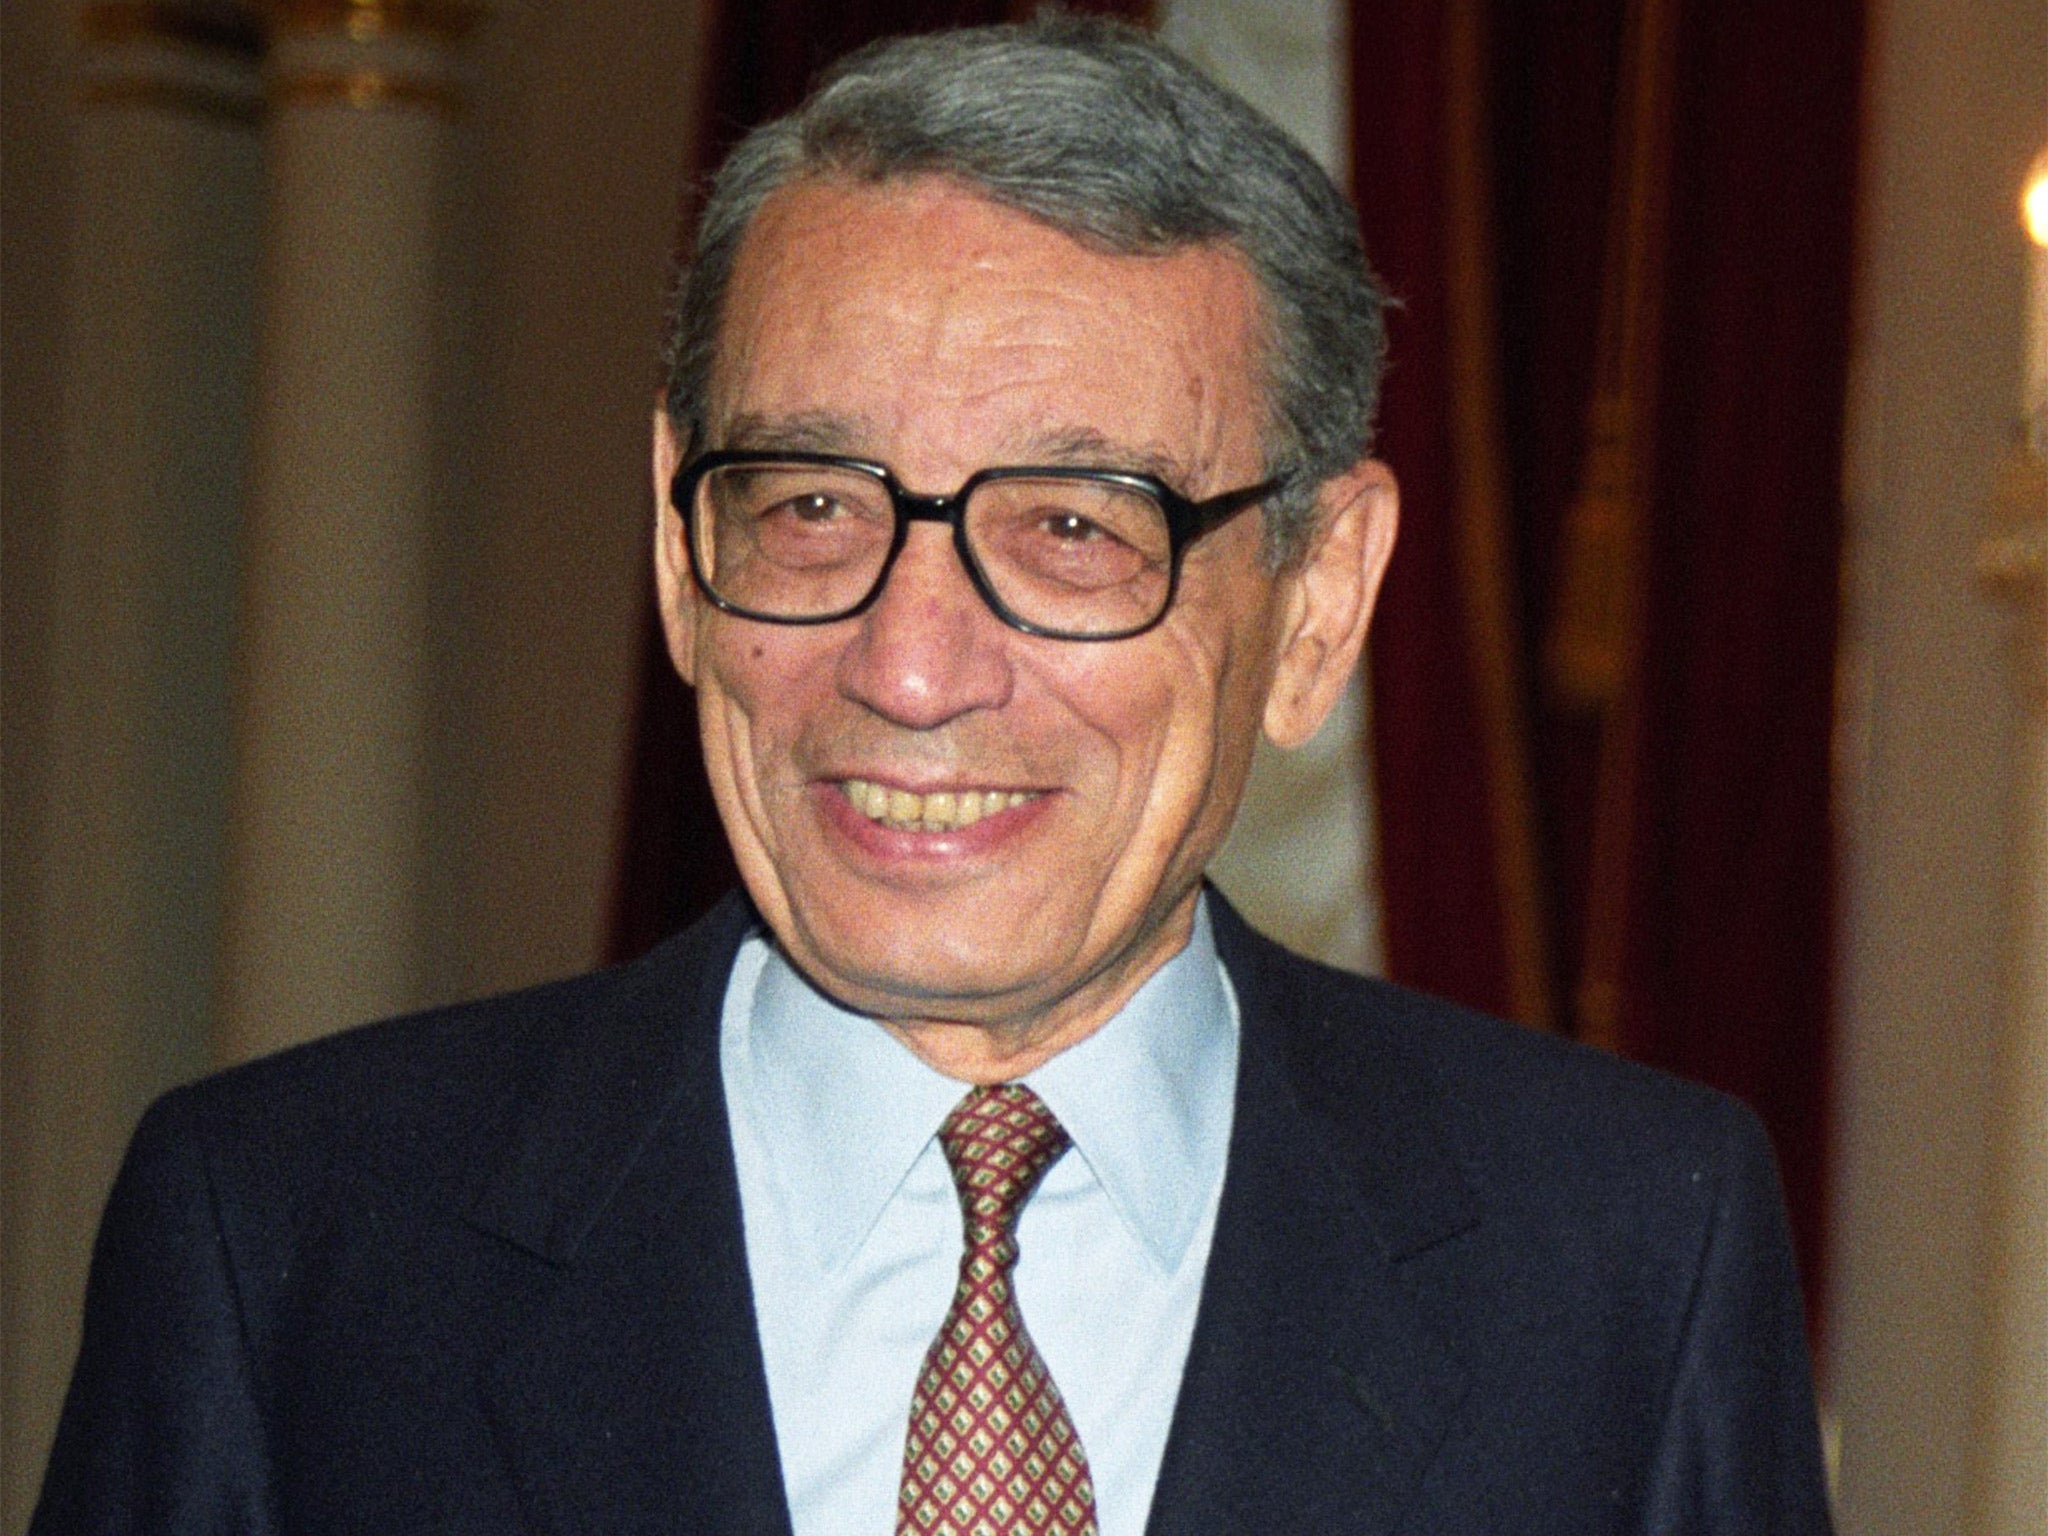 Boutros Boutros-Ghali, former UN Secretary-General, who has died aged 93